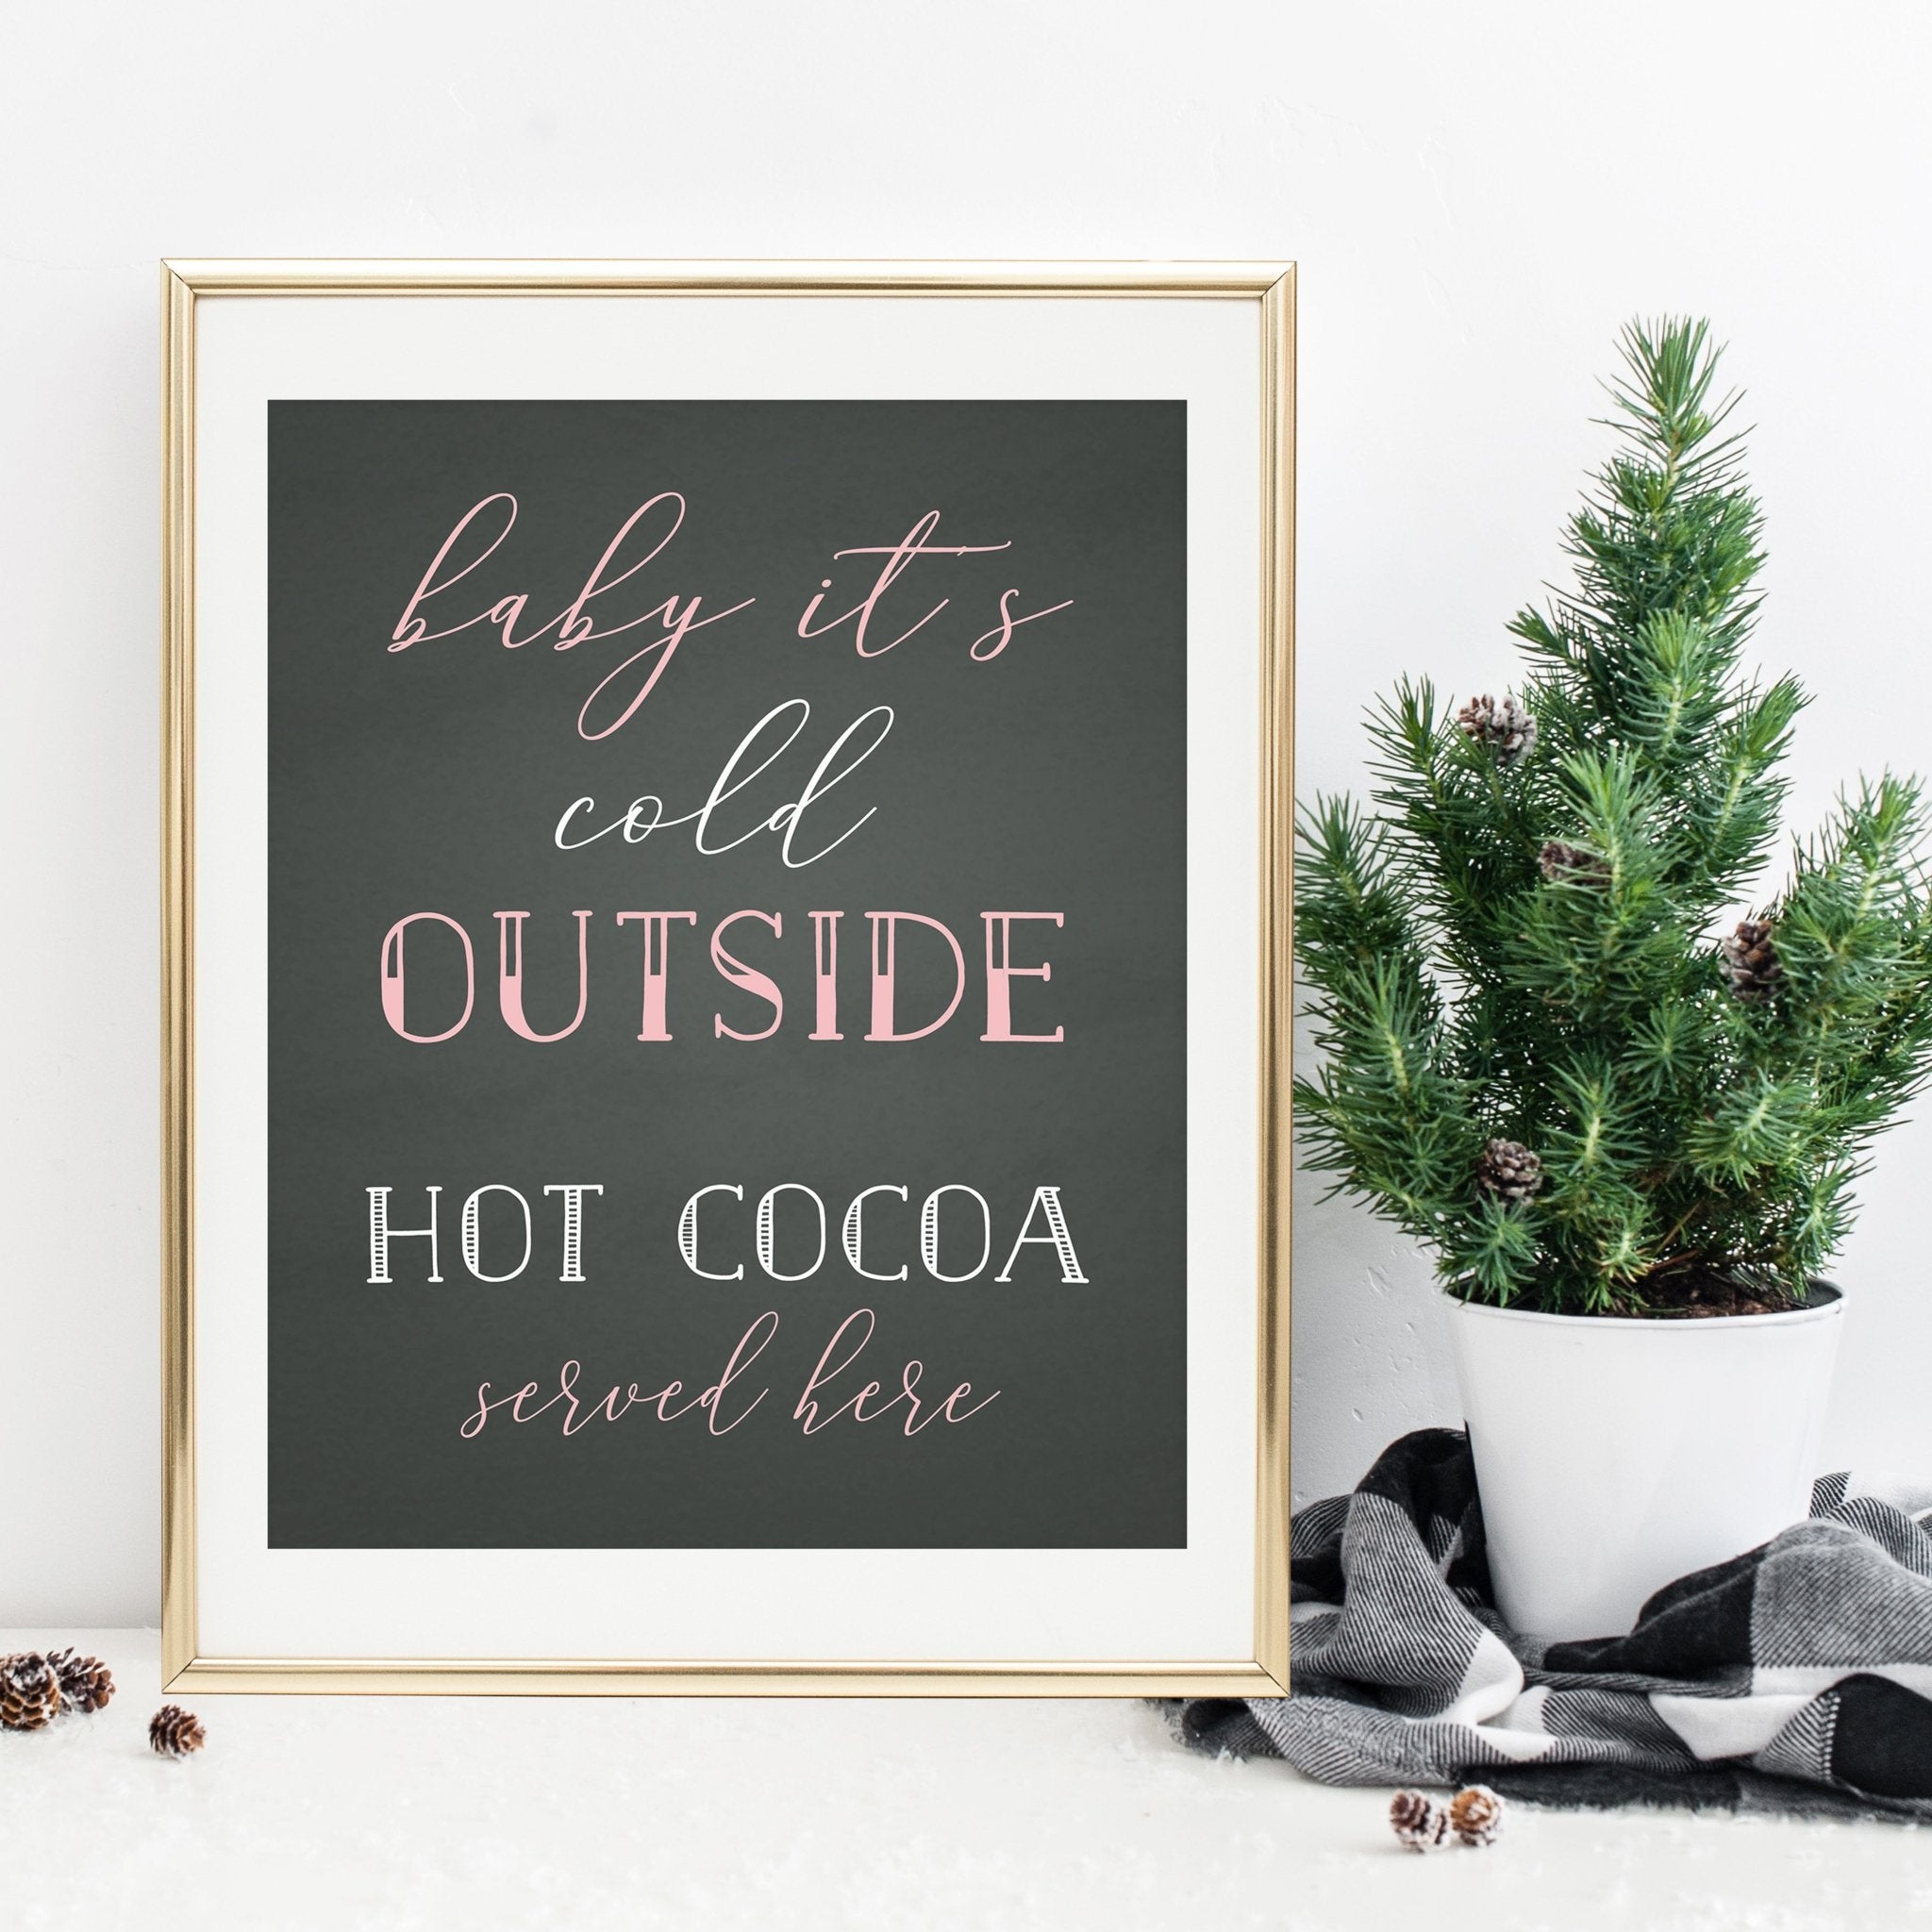 A Holiday Hot Cocoa & Coffee Bar